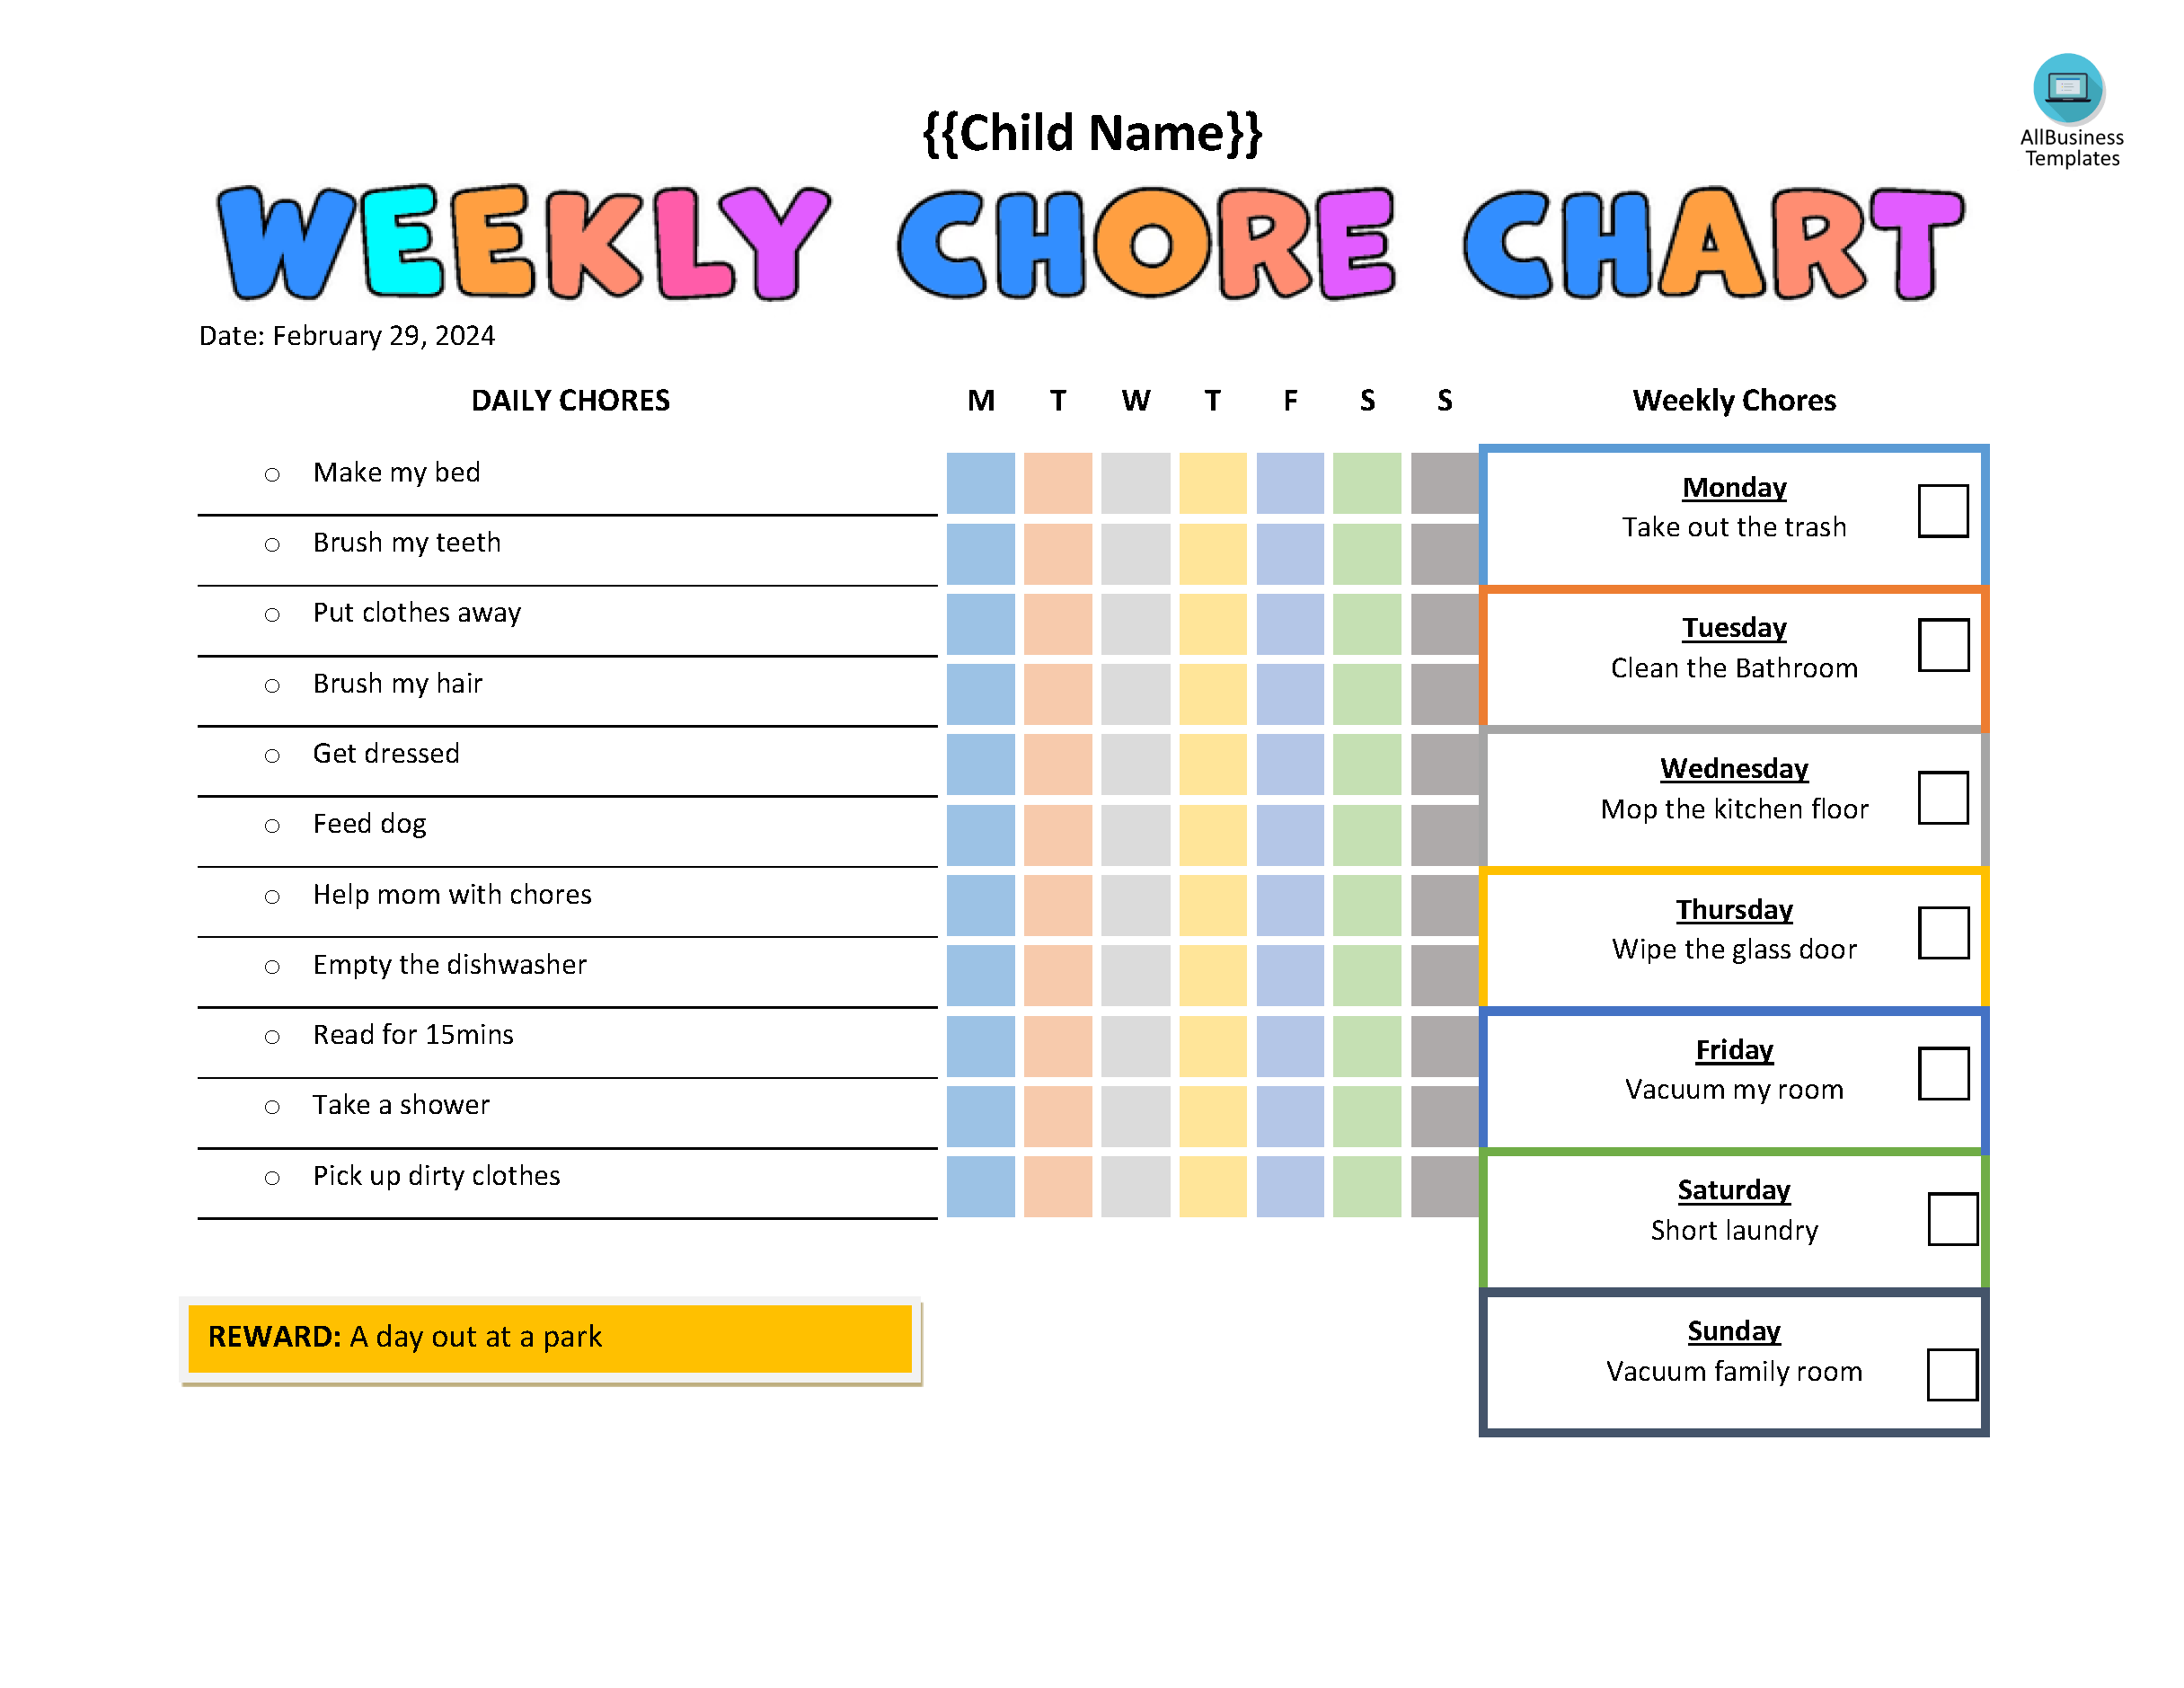 chore-chart-for-children-image-to-u